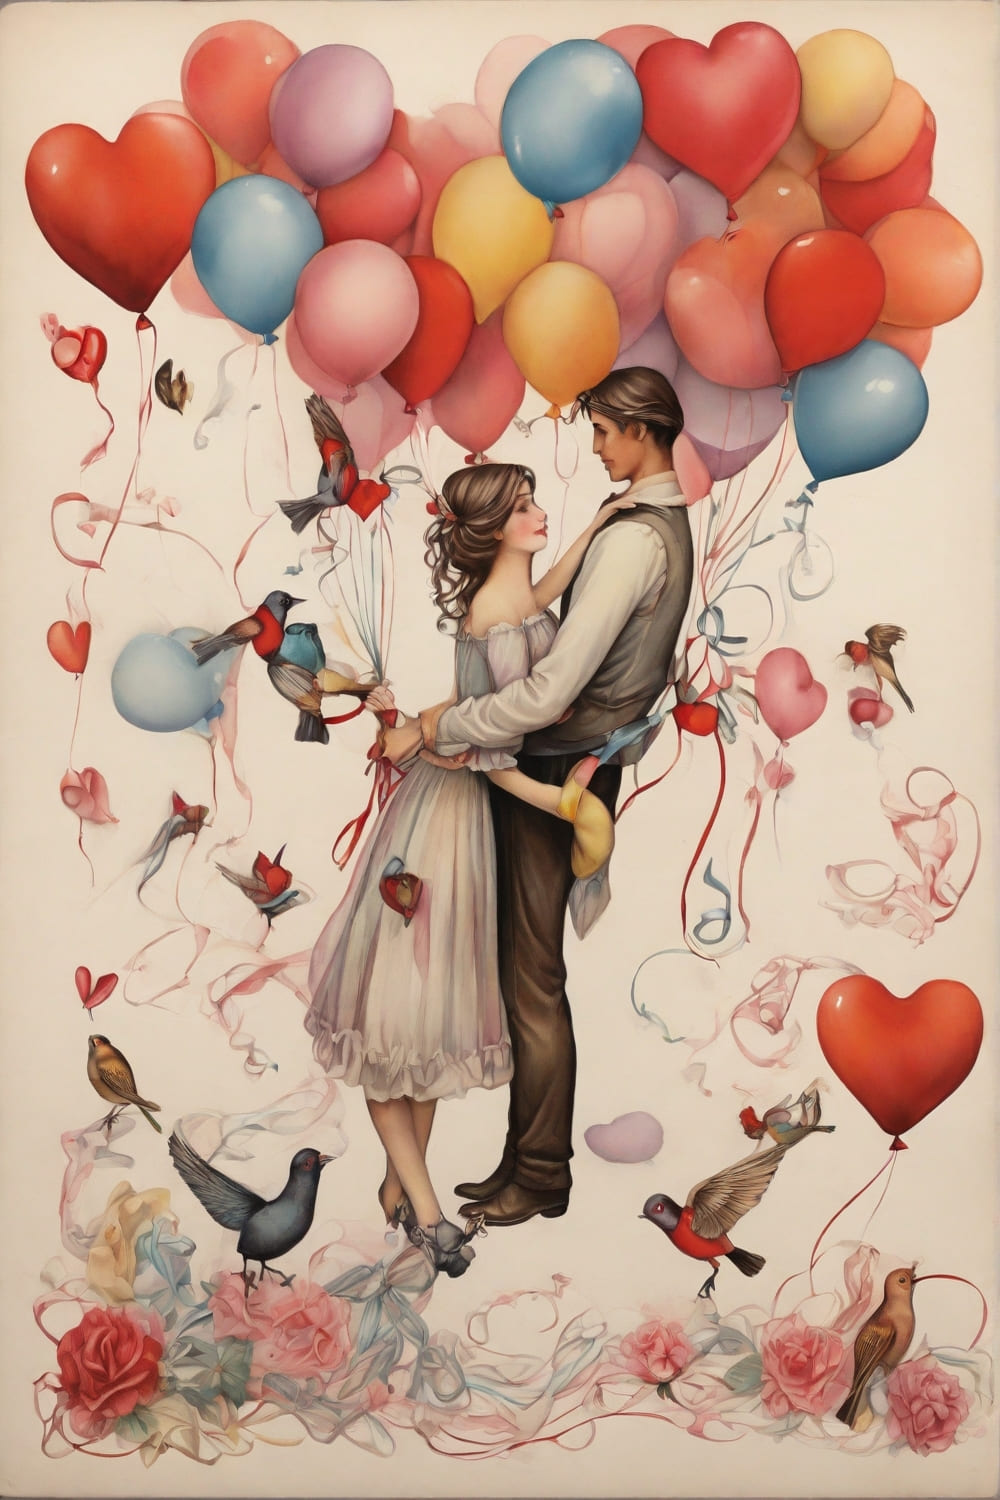 postcard, balloons, ribbons, birds, hearts, woman, man, kids pinterest preview image.